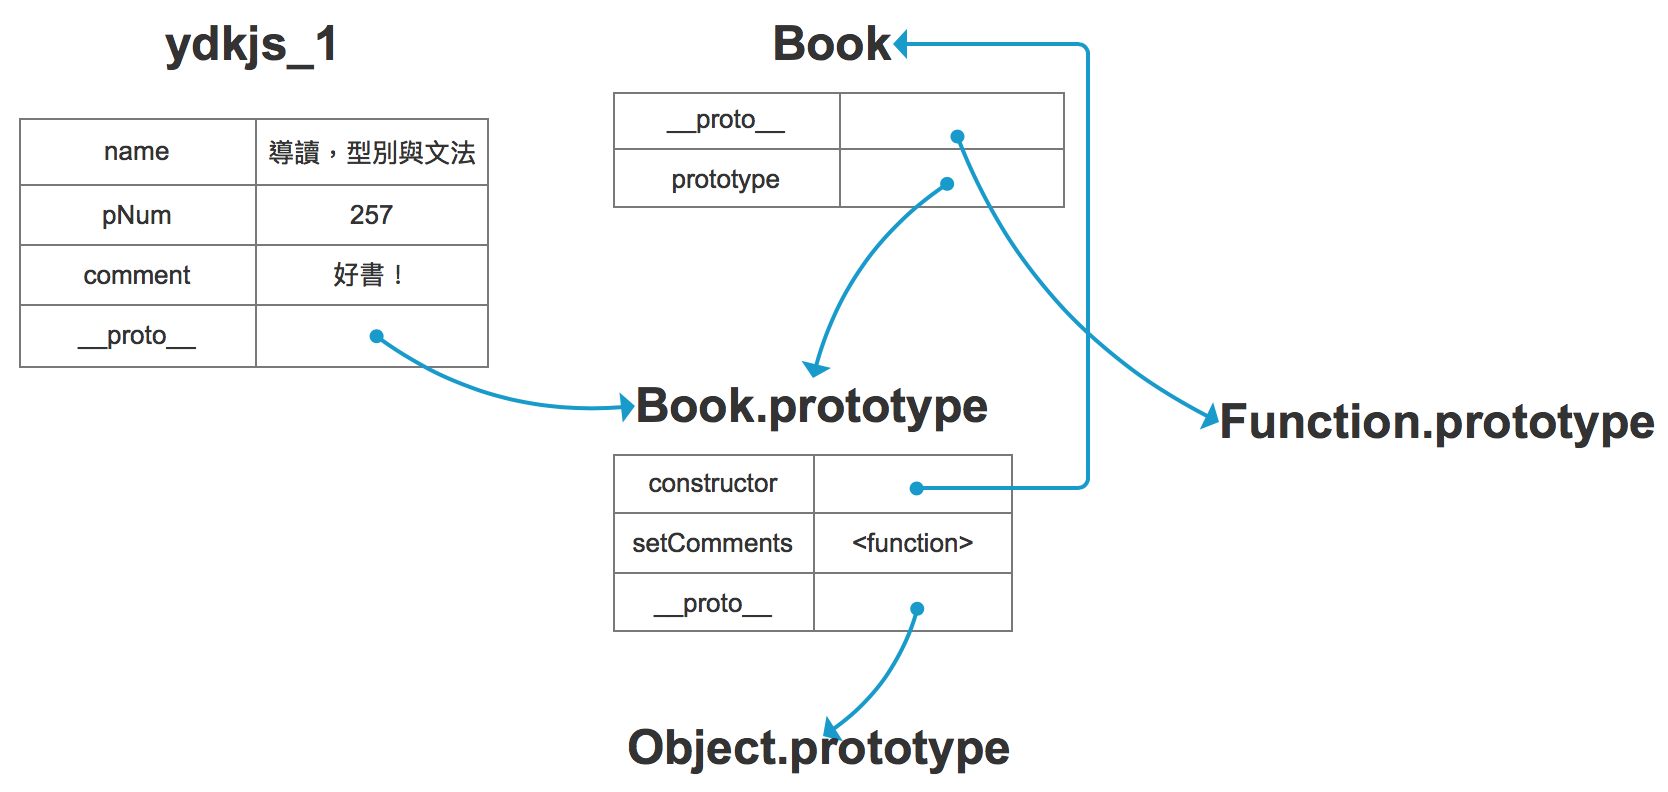 `ydkjs_1.__proto__` 所存的參考即指向 `Book.prototype` 的位置